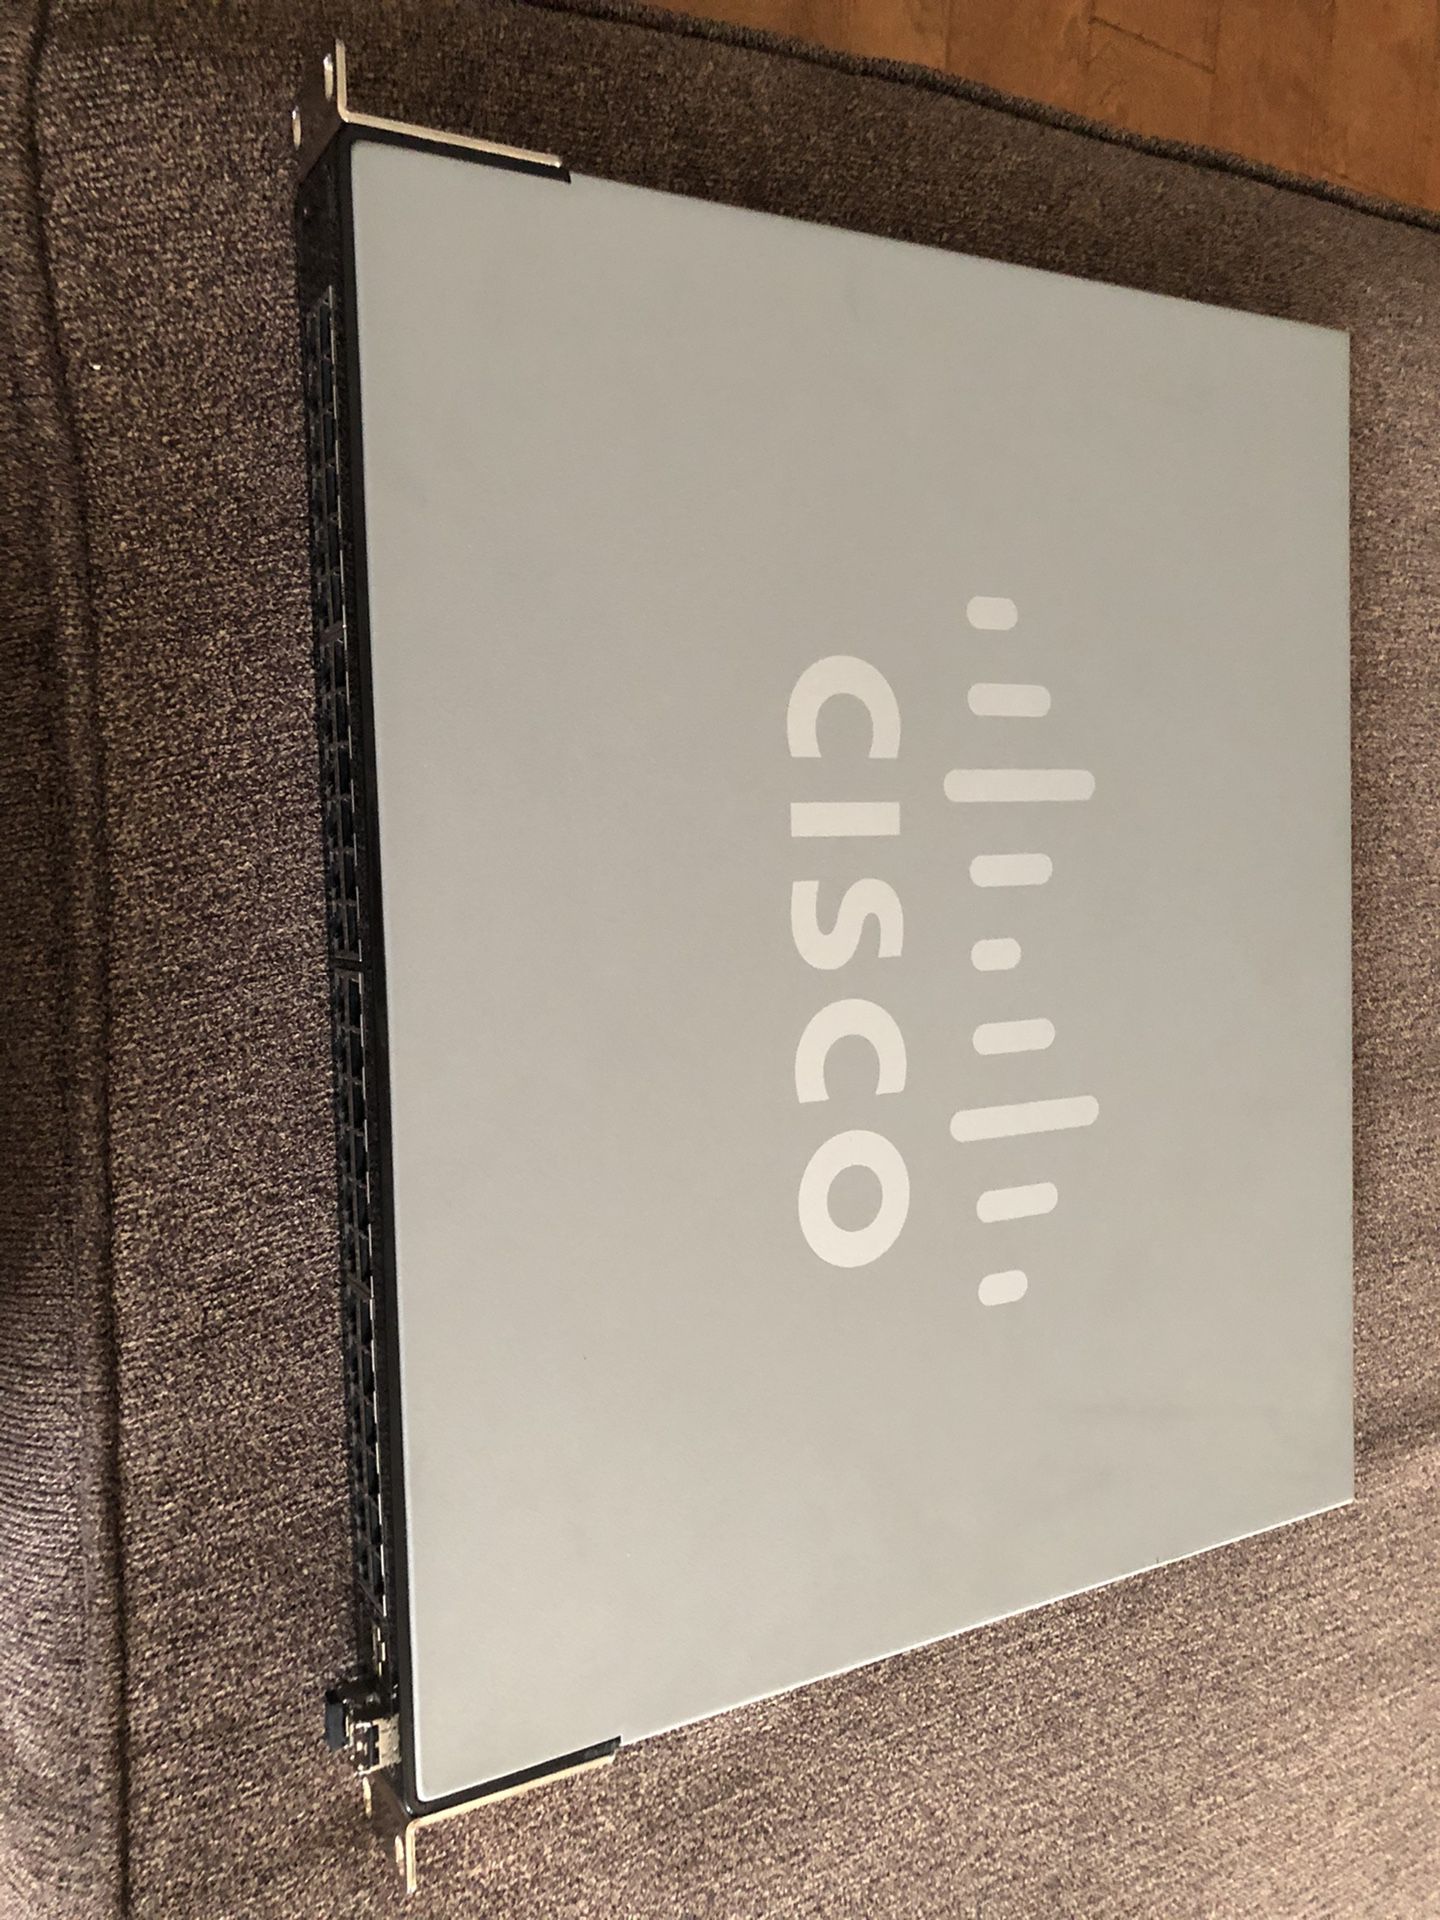 Cisco switch